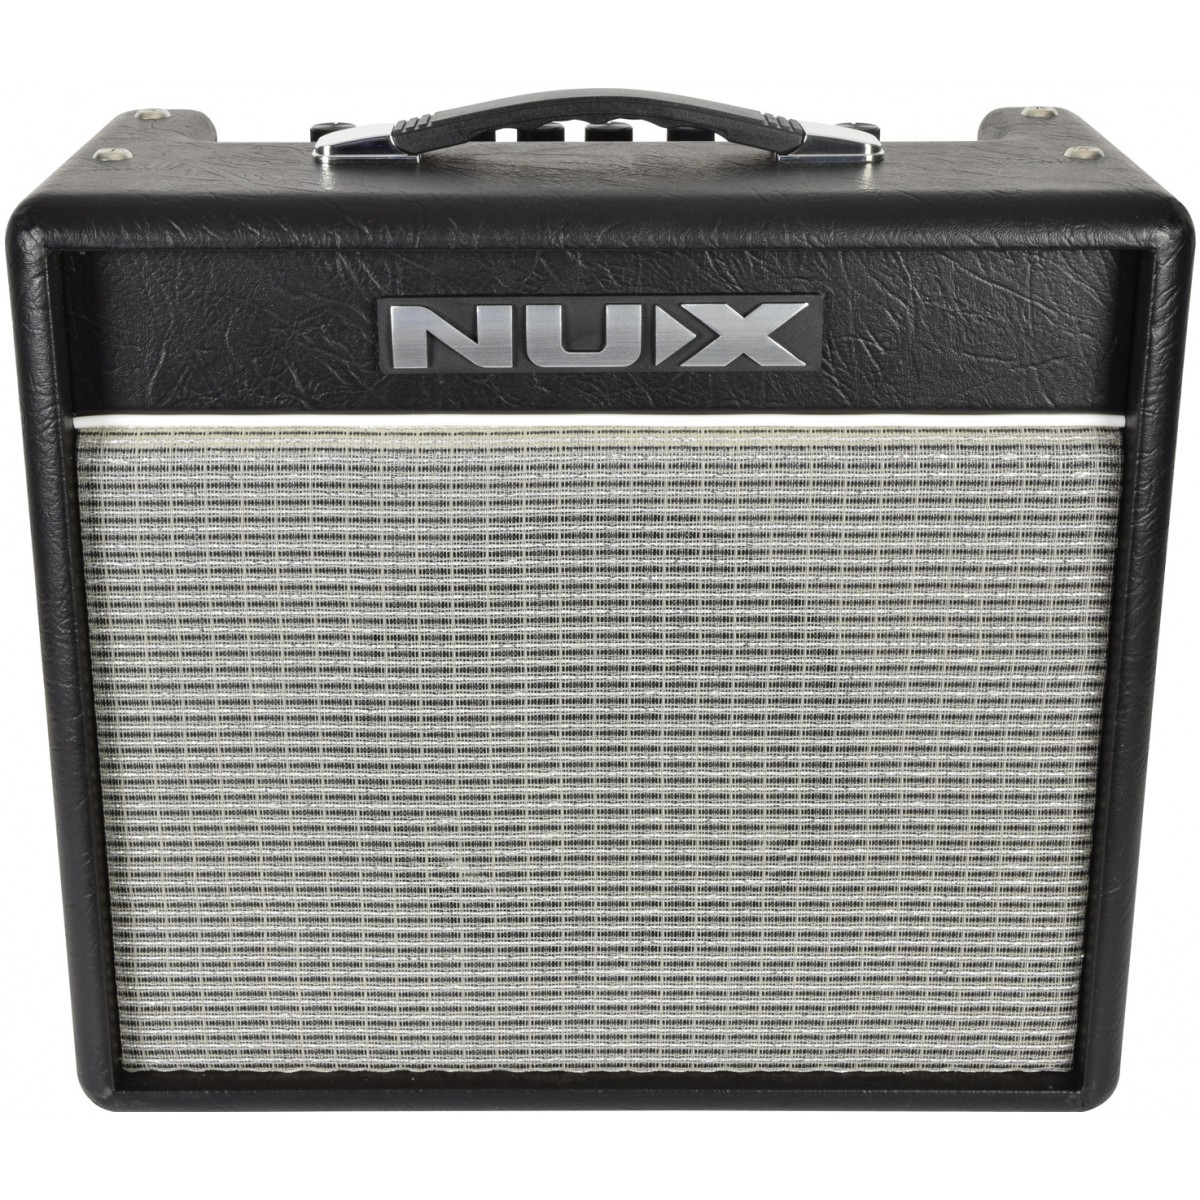 NU-X Mighty 20 BT, kombo pro elektrickou kytaru, 20W